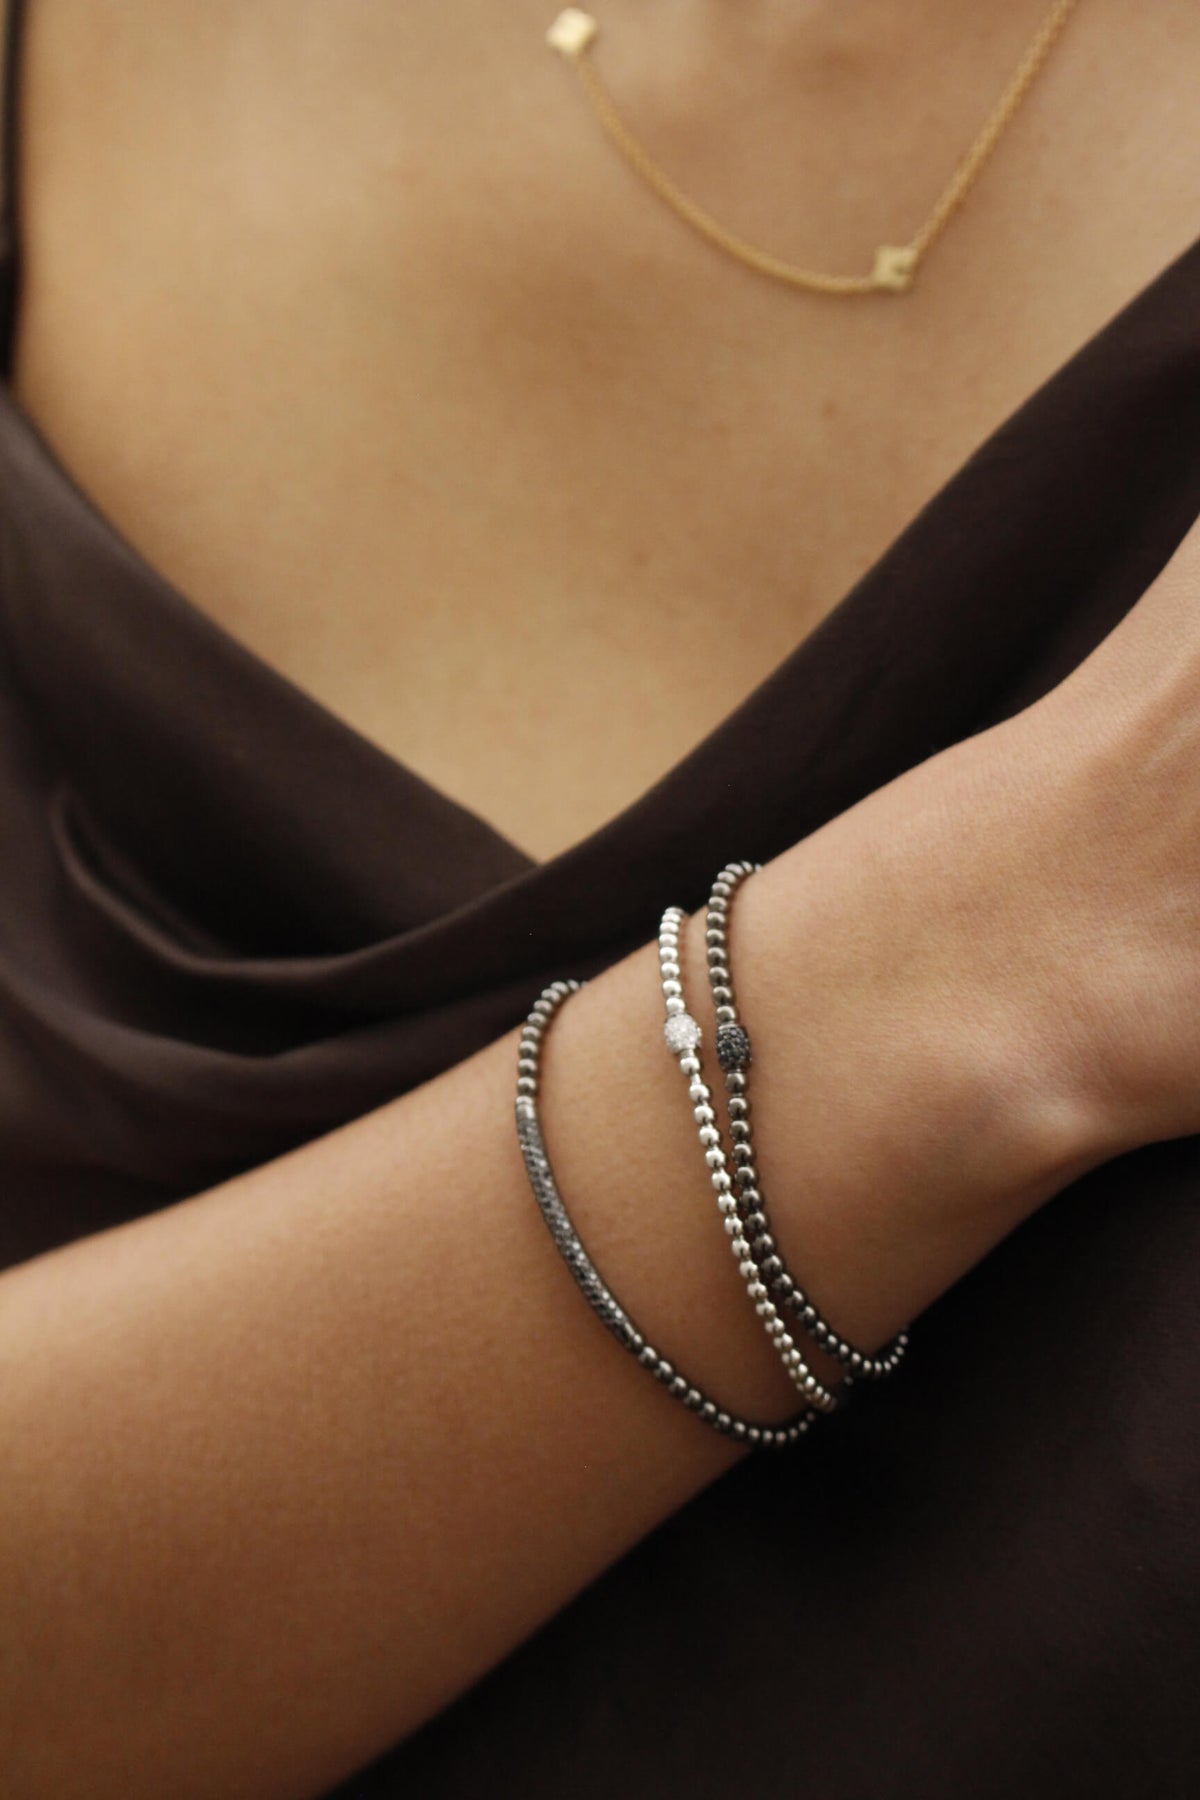 Al Coro Stretchy Bracelet in 18k White Gold with Diamonds - Orsini Jewellers NZ